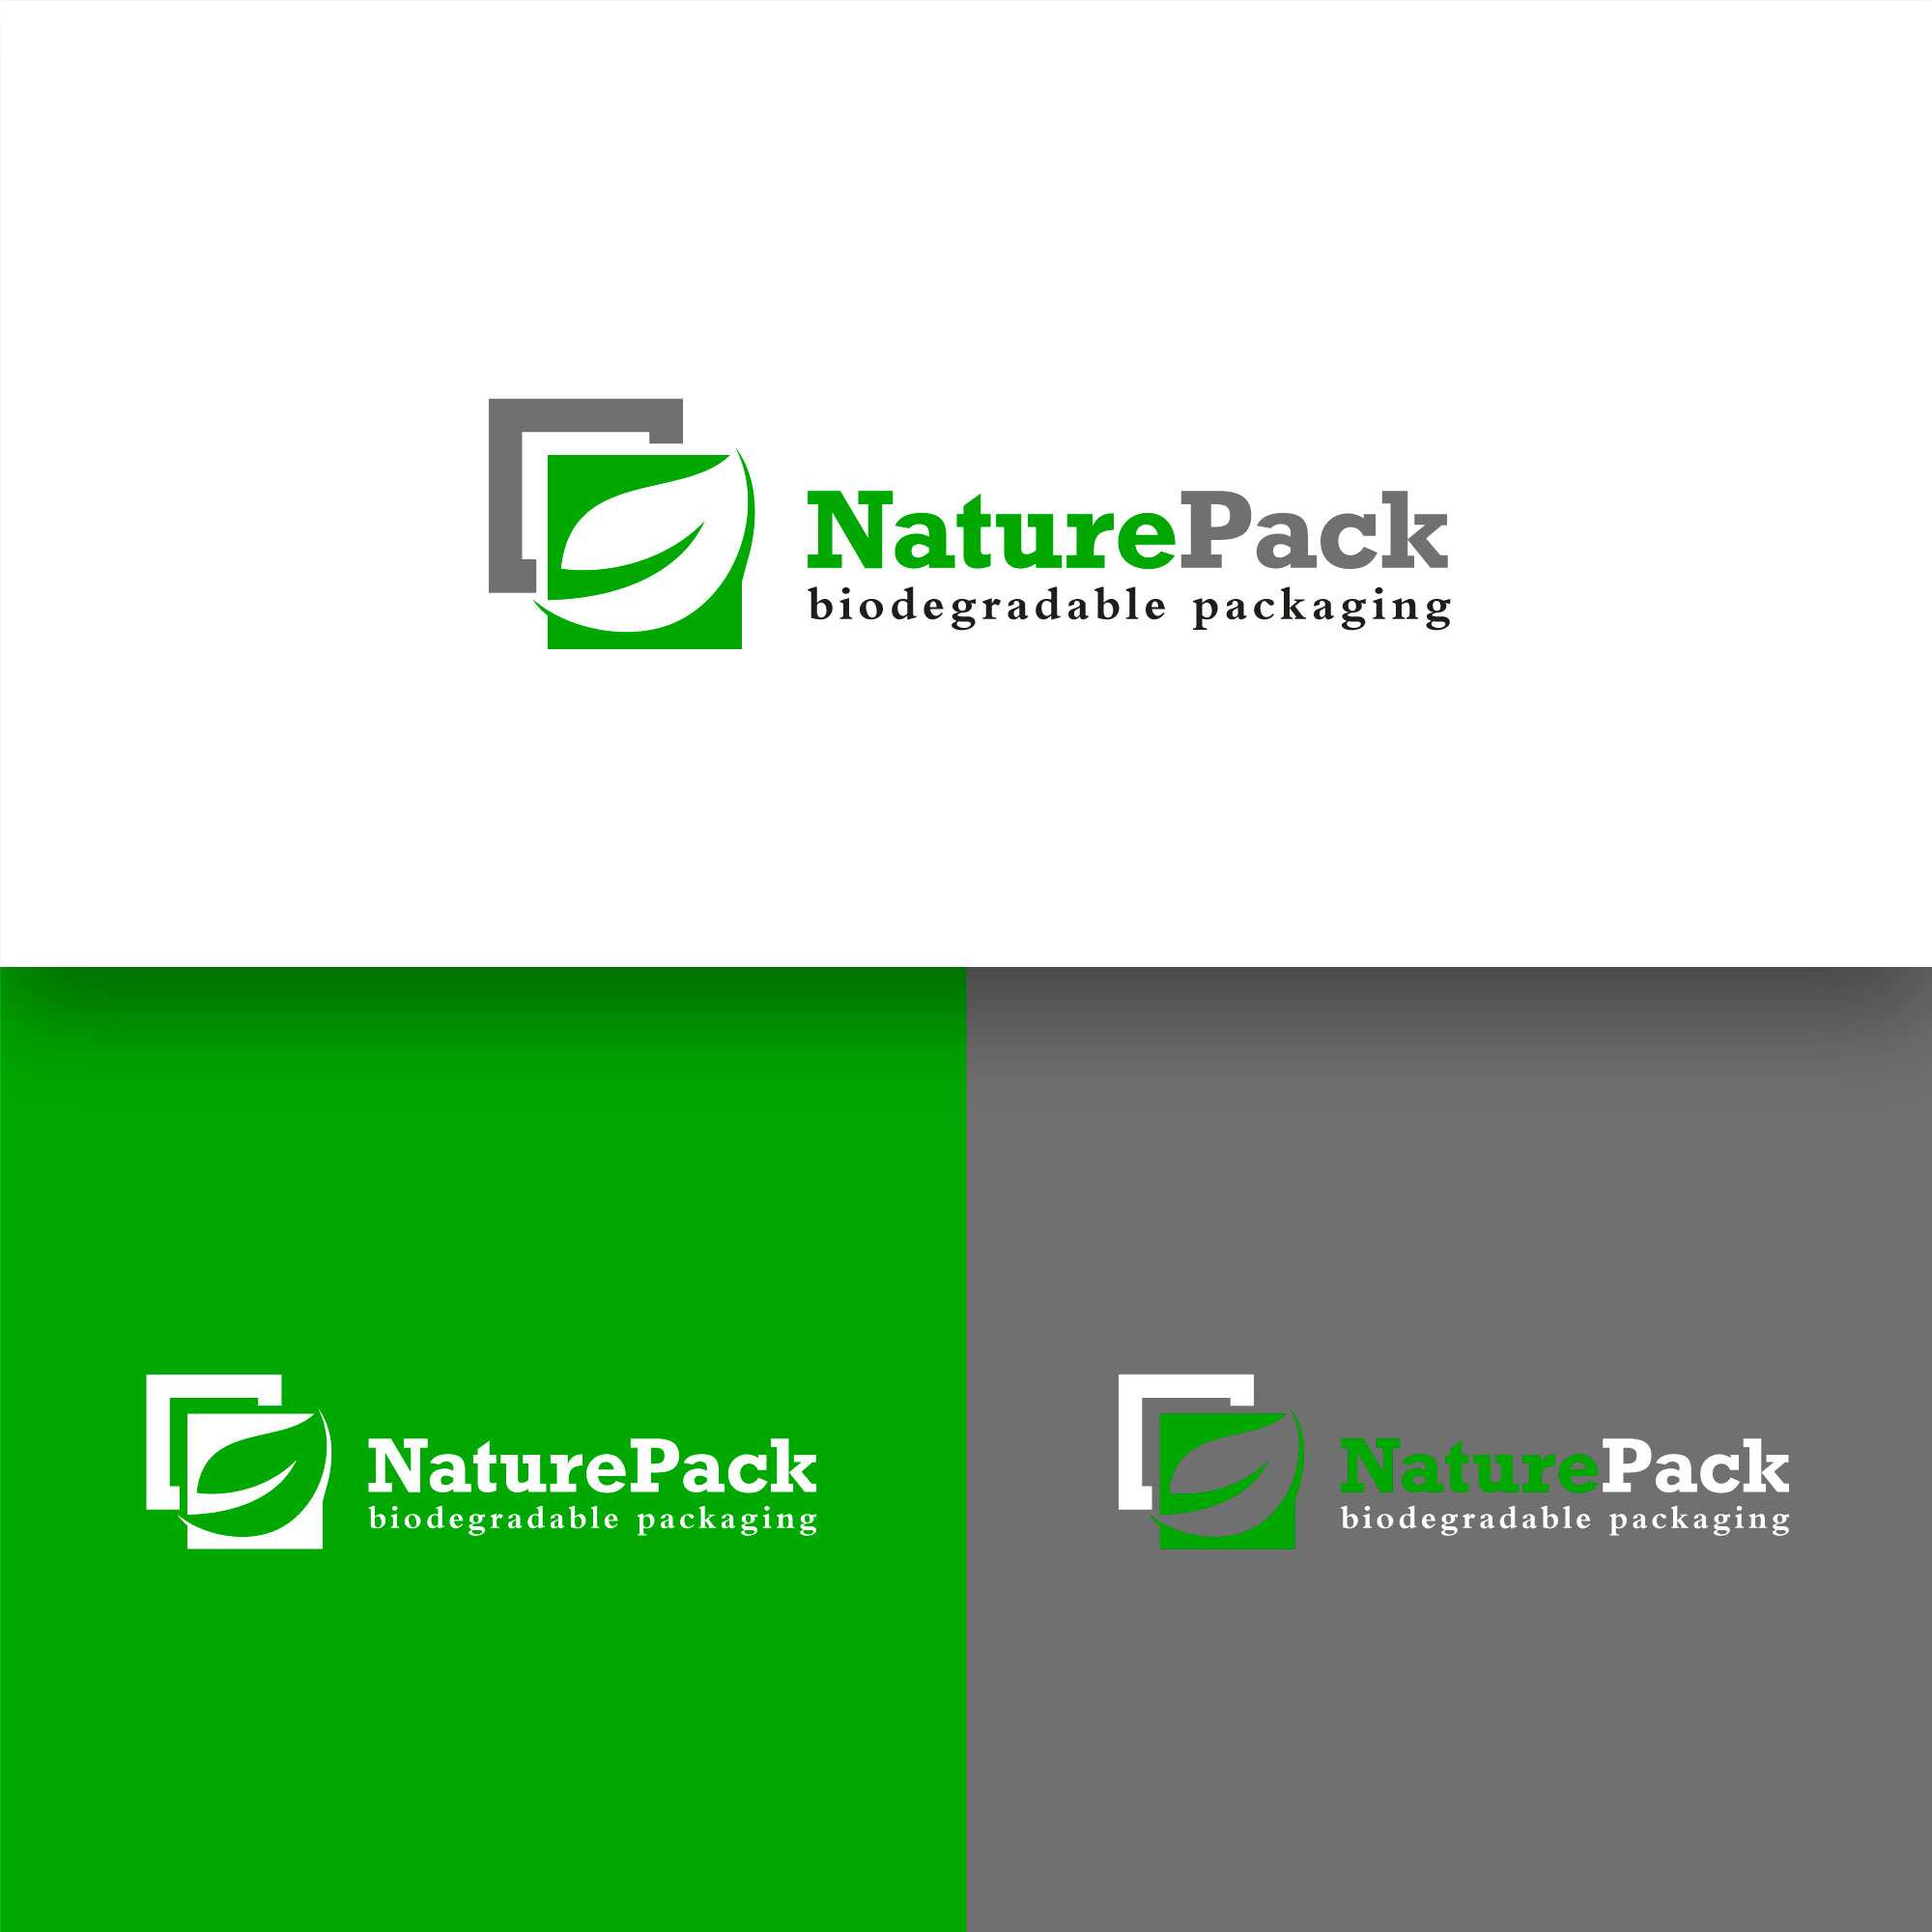 NaturePackLogo_Final.jpg